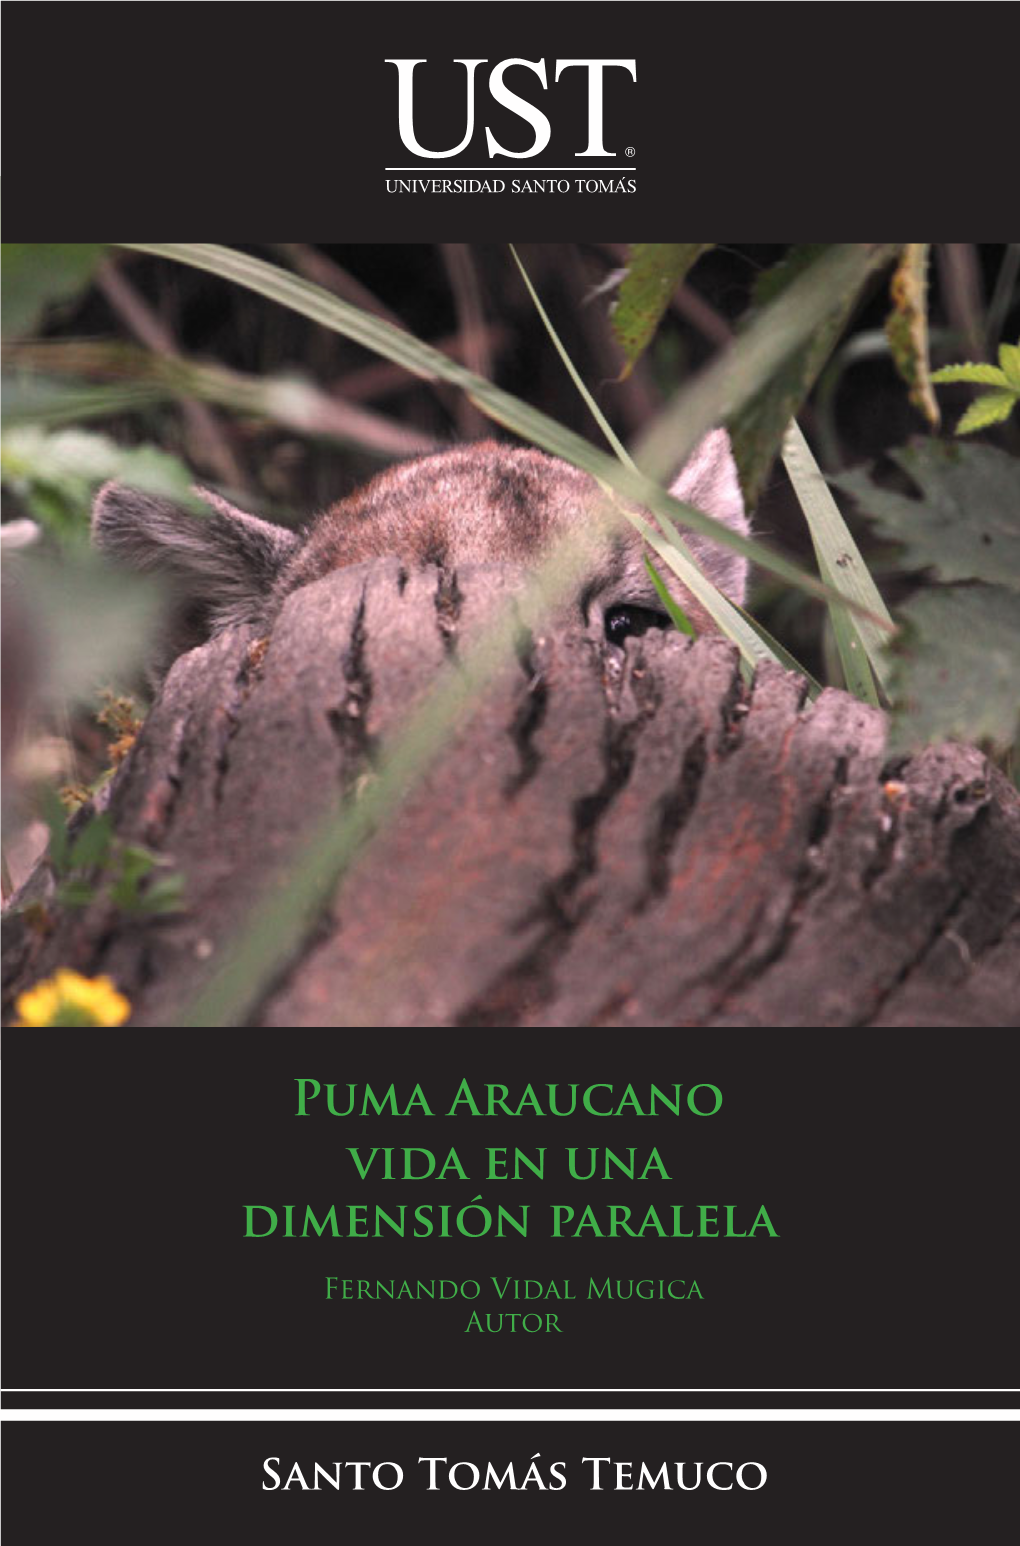 Libro-Puma-Araucano-UST.Pdf